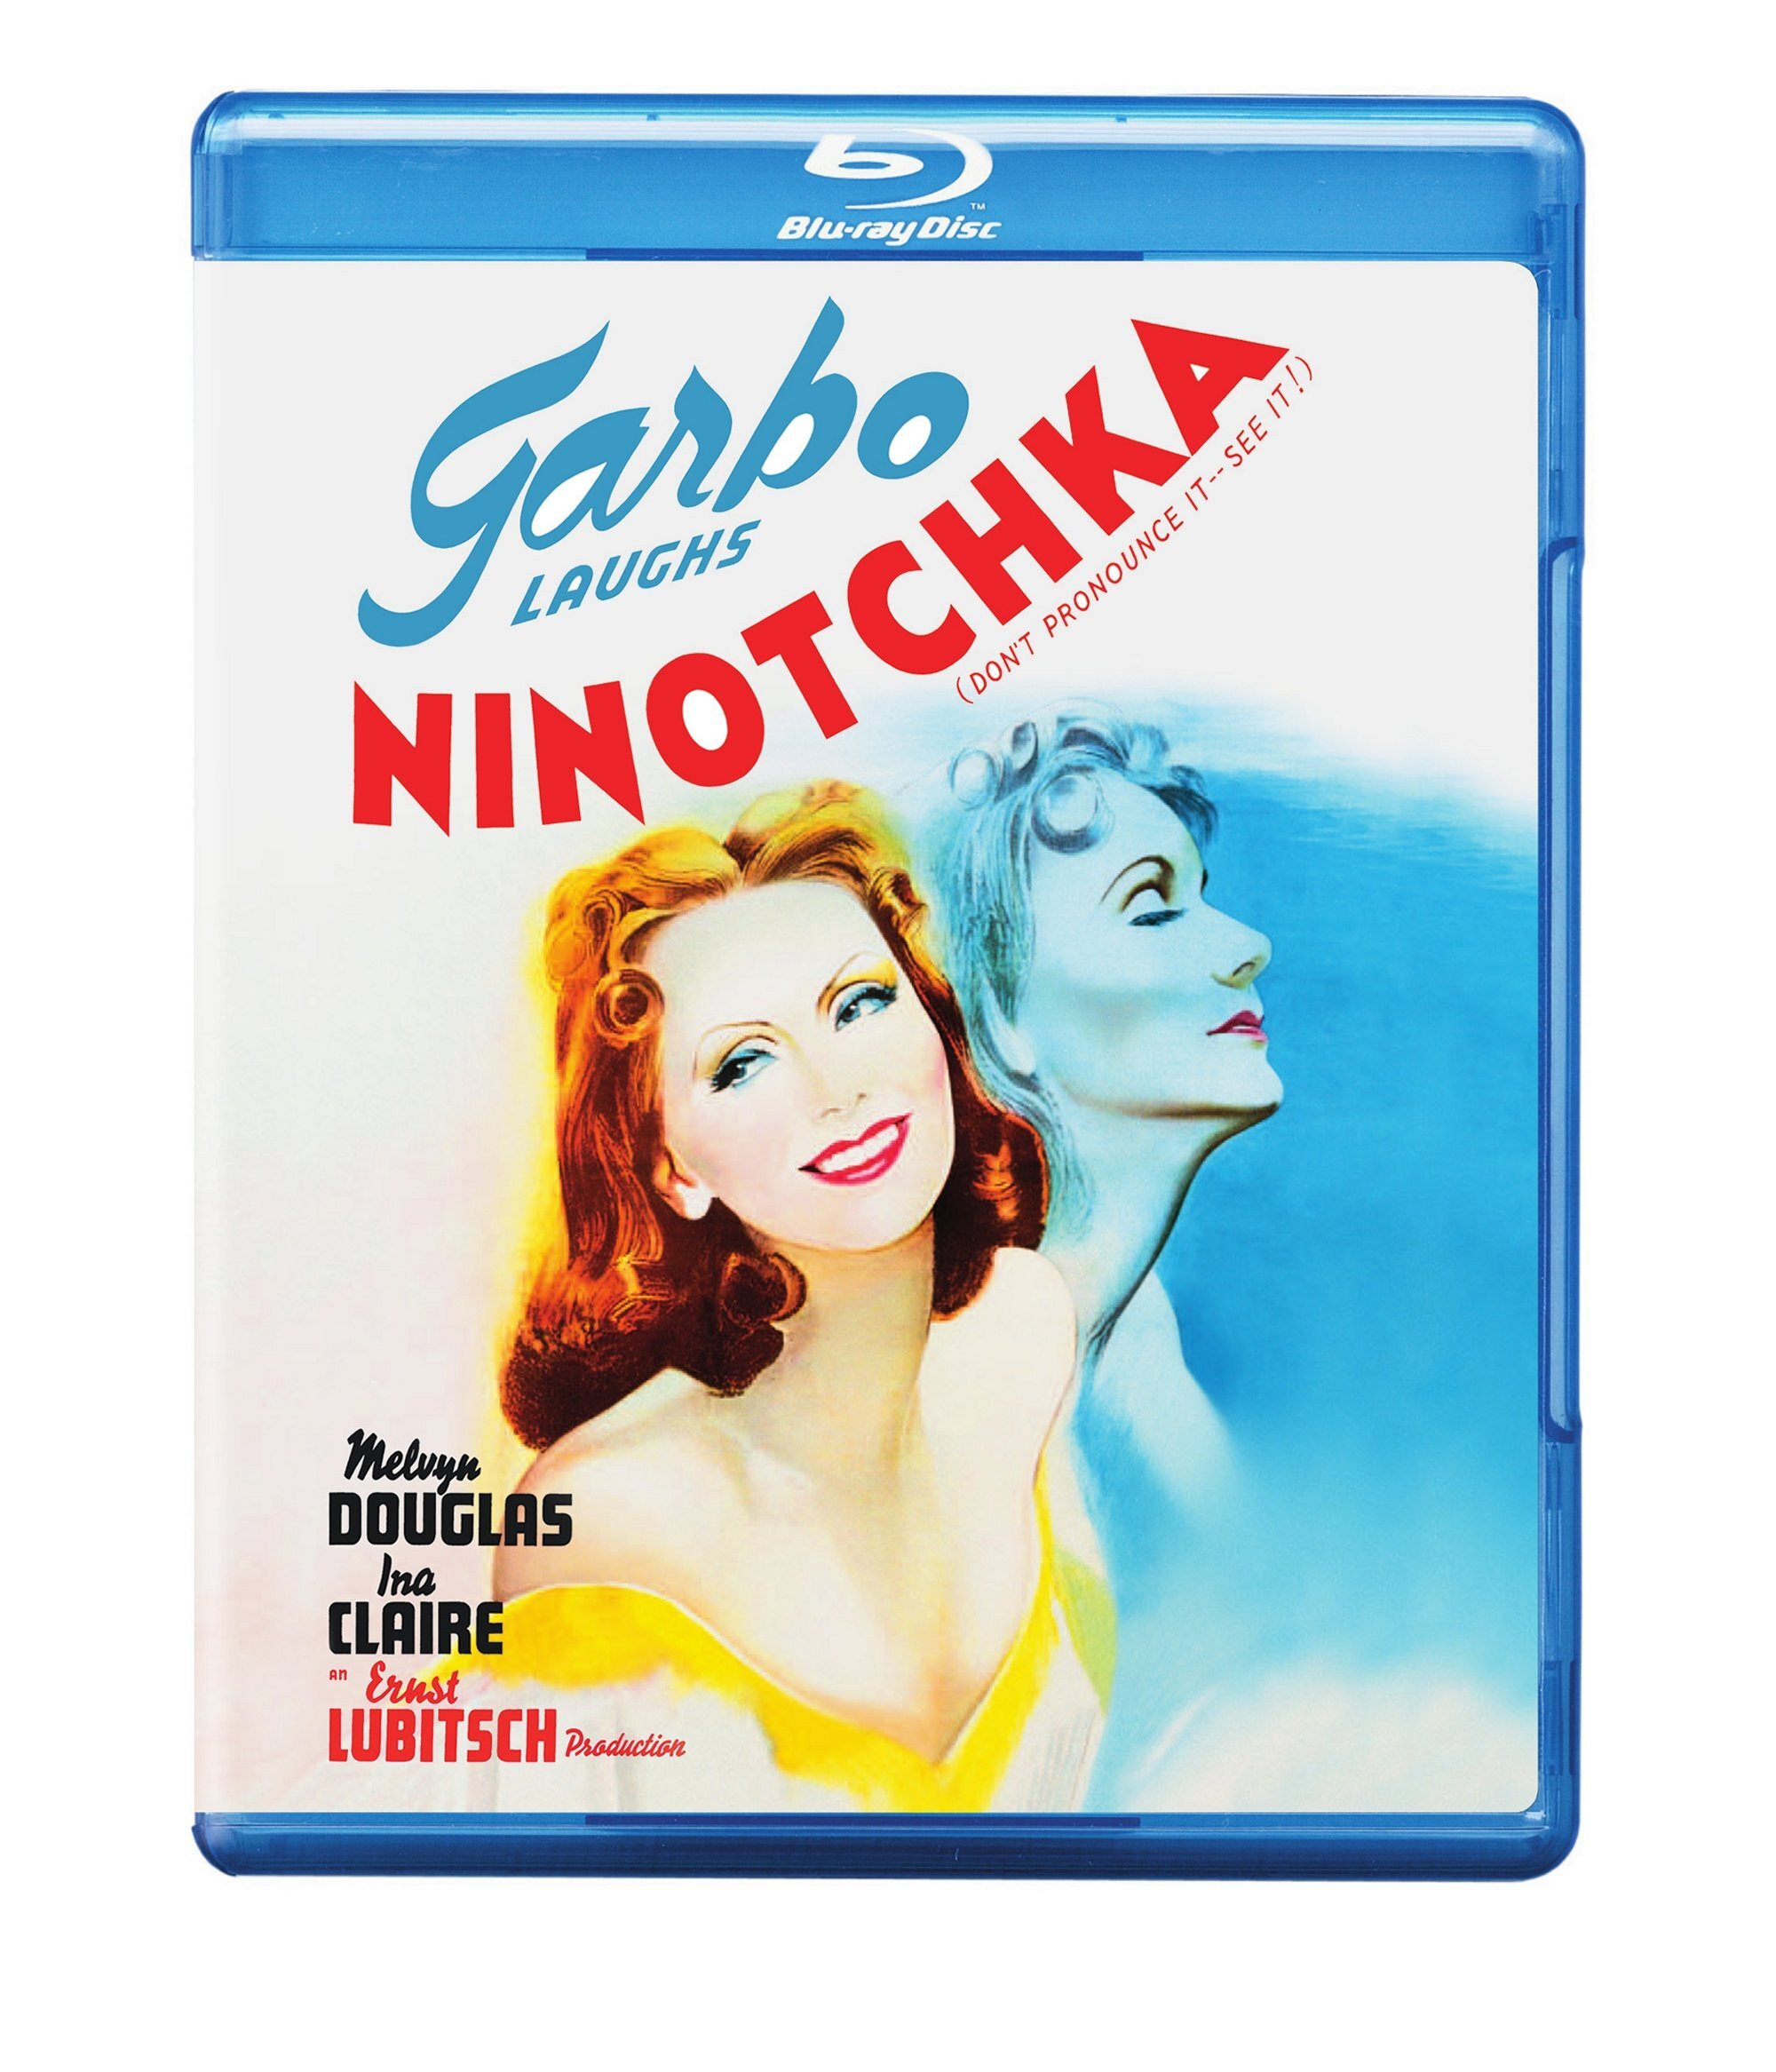 Ninotchka - Blu-ray [ 1939 ]  - Classic Movies On Blu-ray - Movies On GRUV